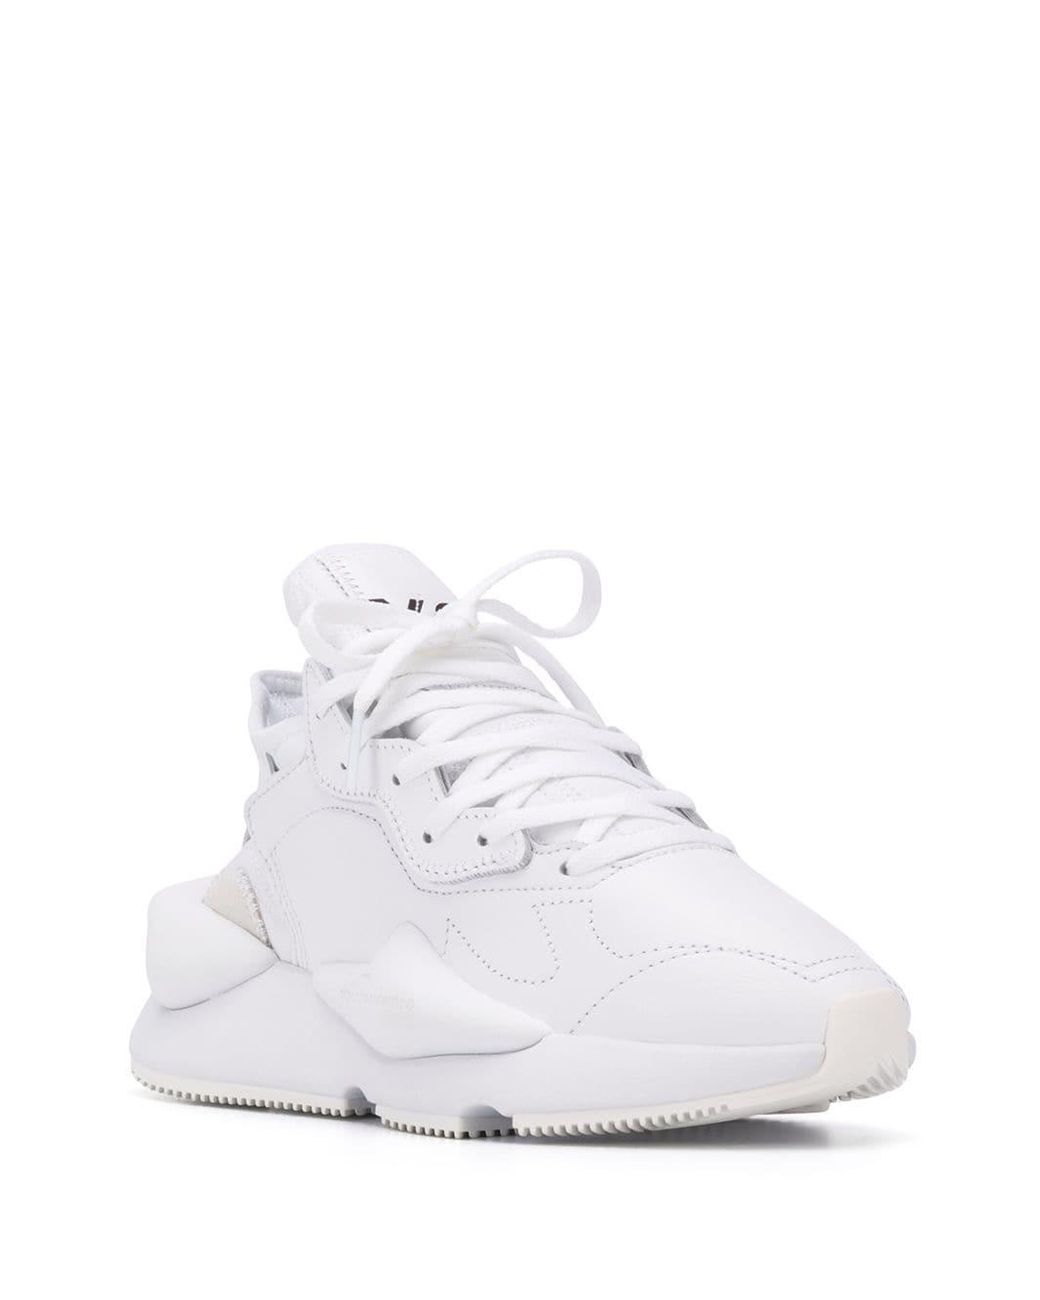 Y-3 Adidas Kaiwa Sneakers in White | Lyst